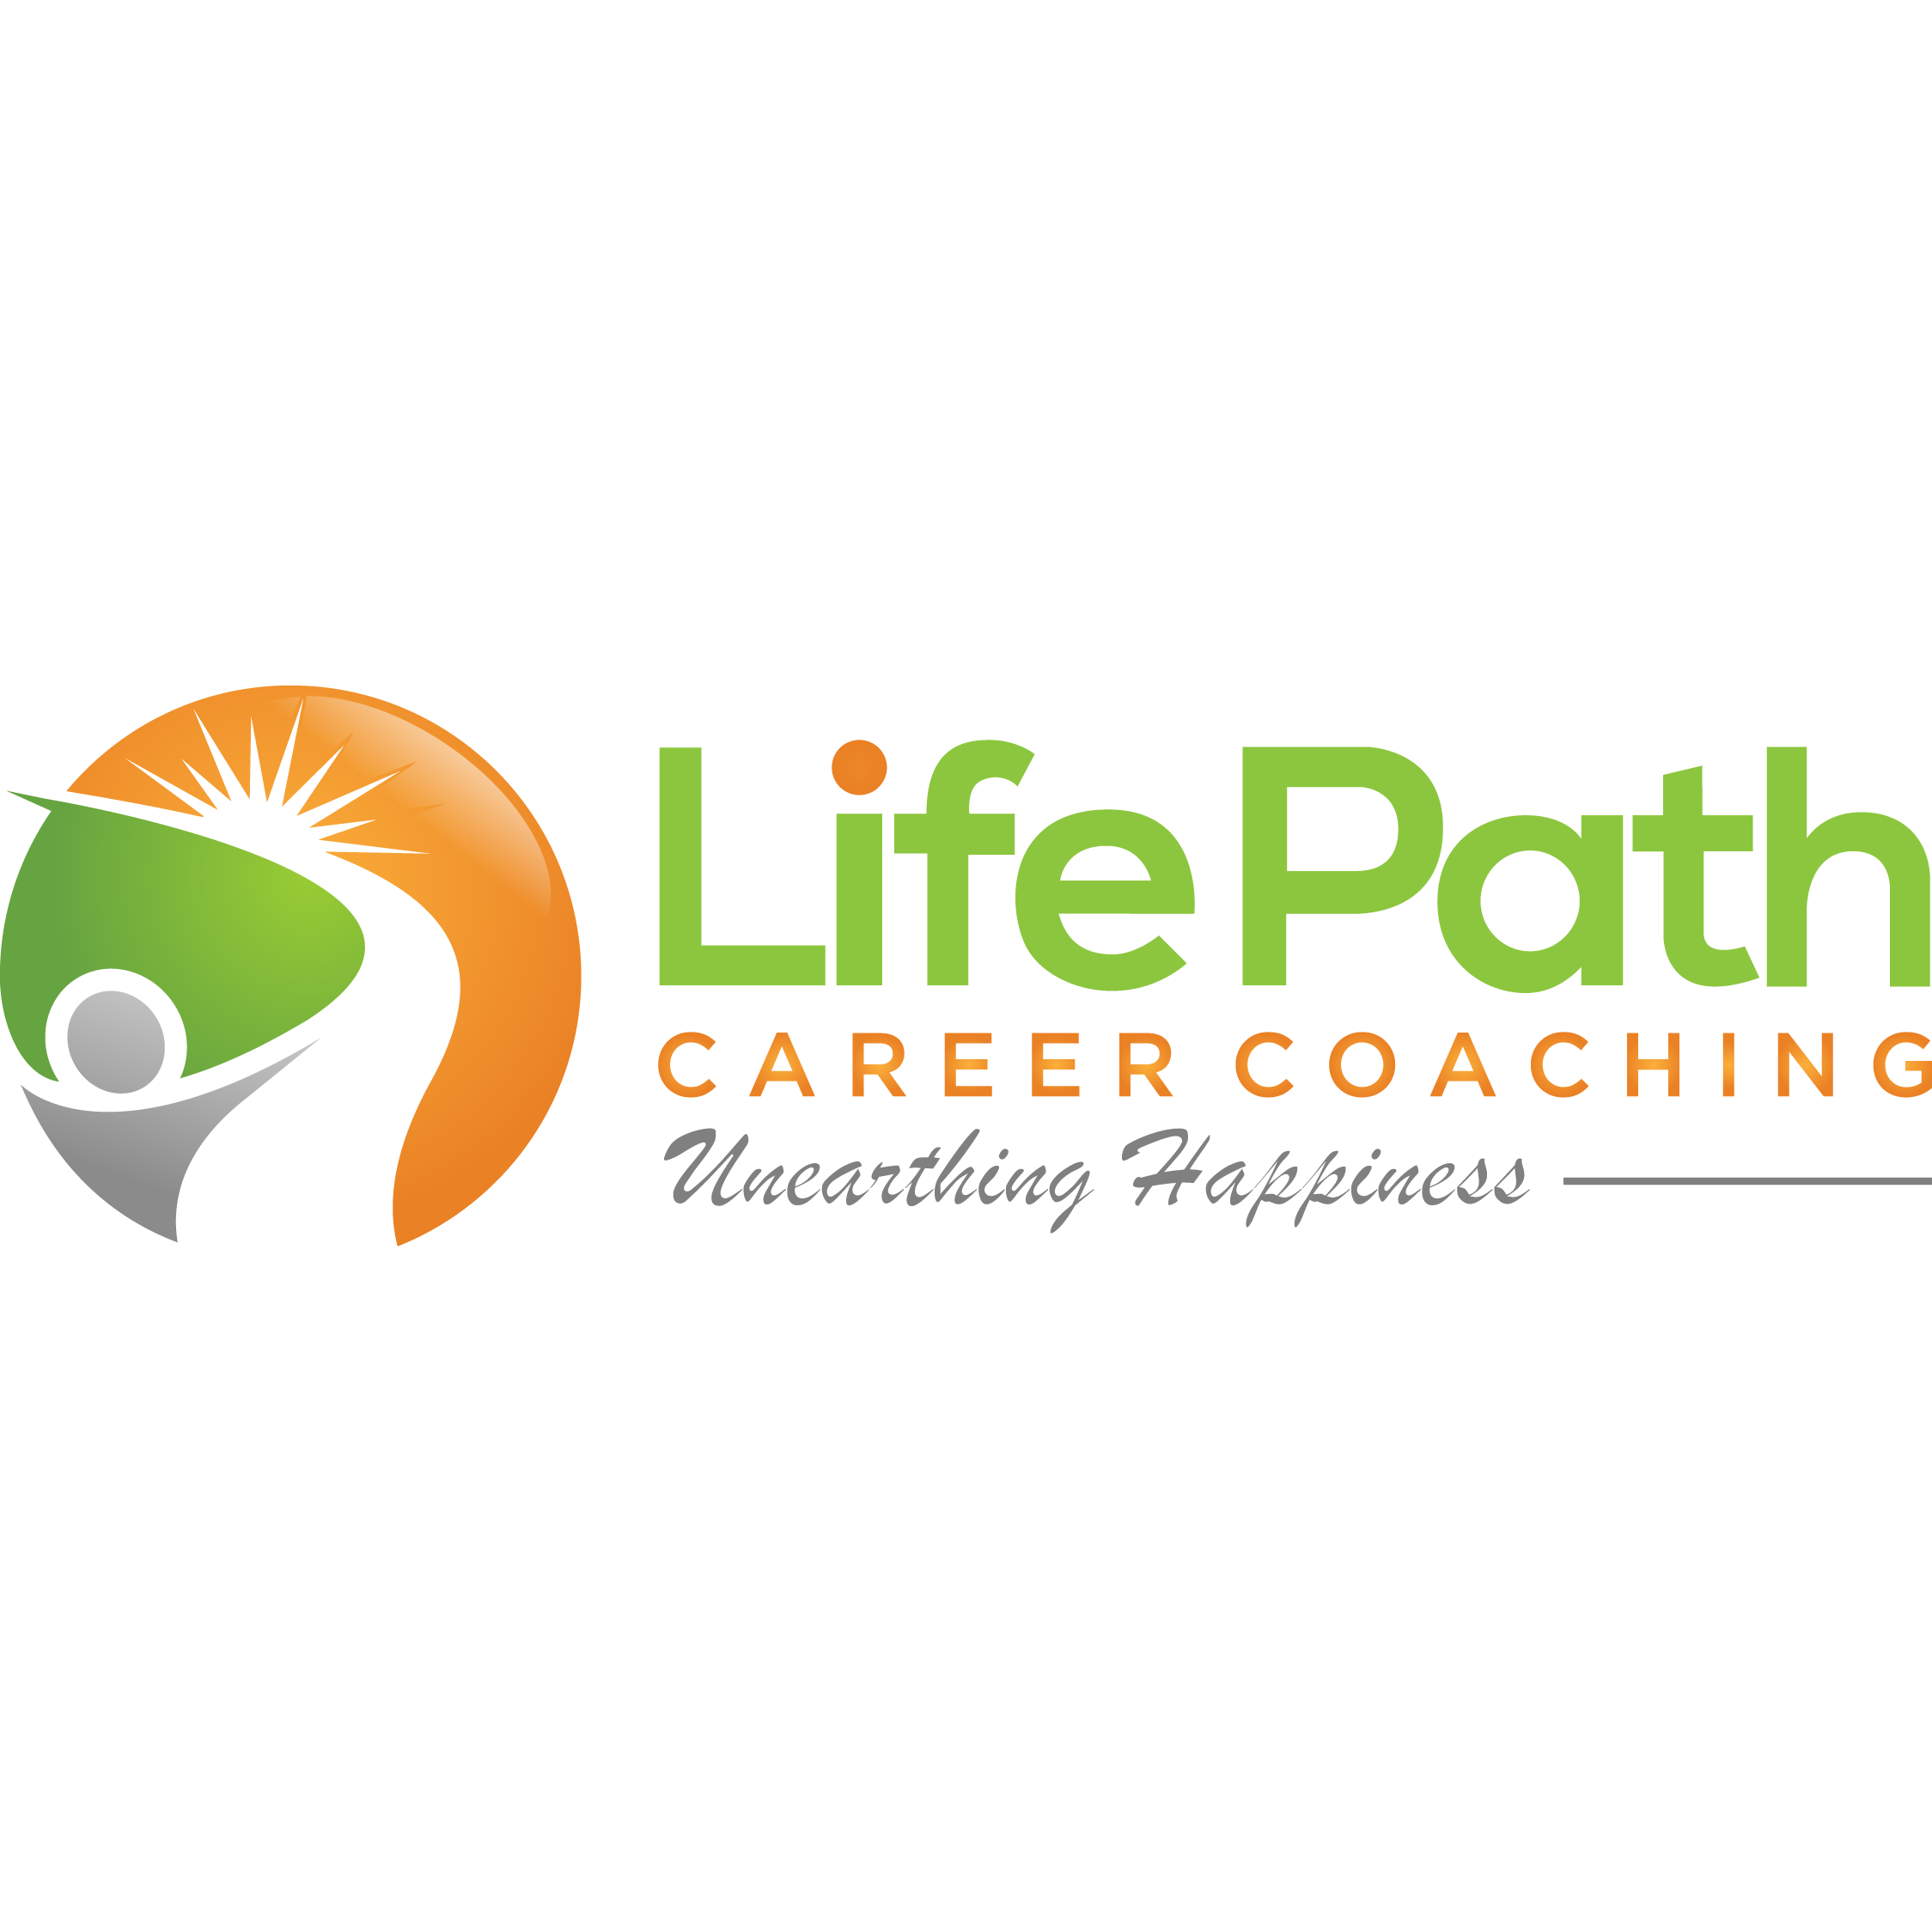 Life Path Career Coaching Coorparoo 0417 726 861